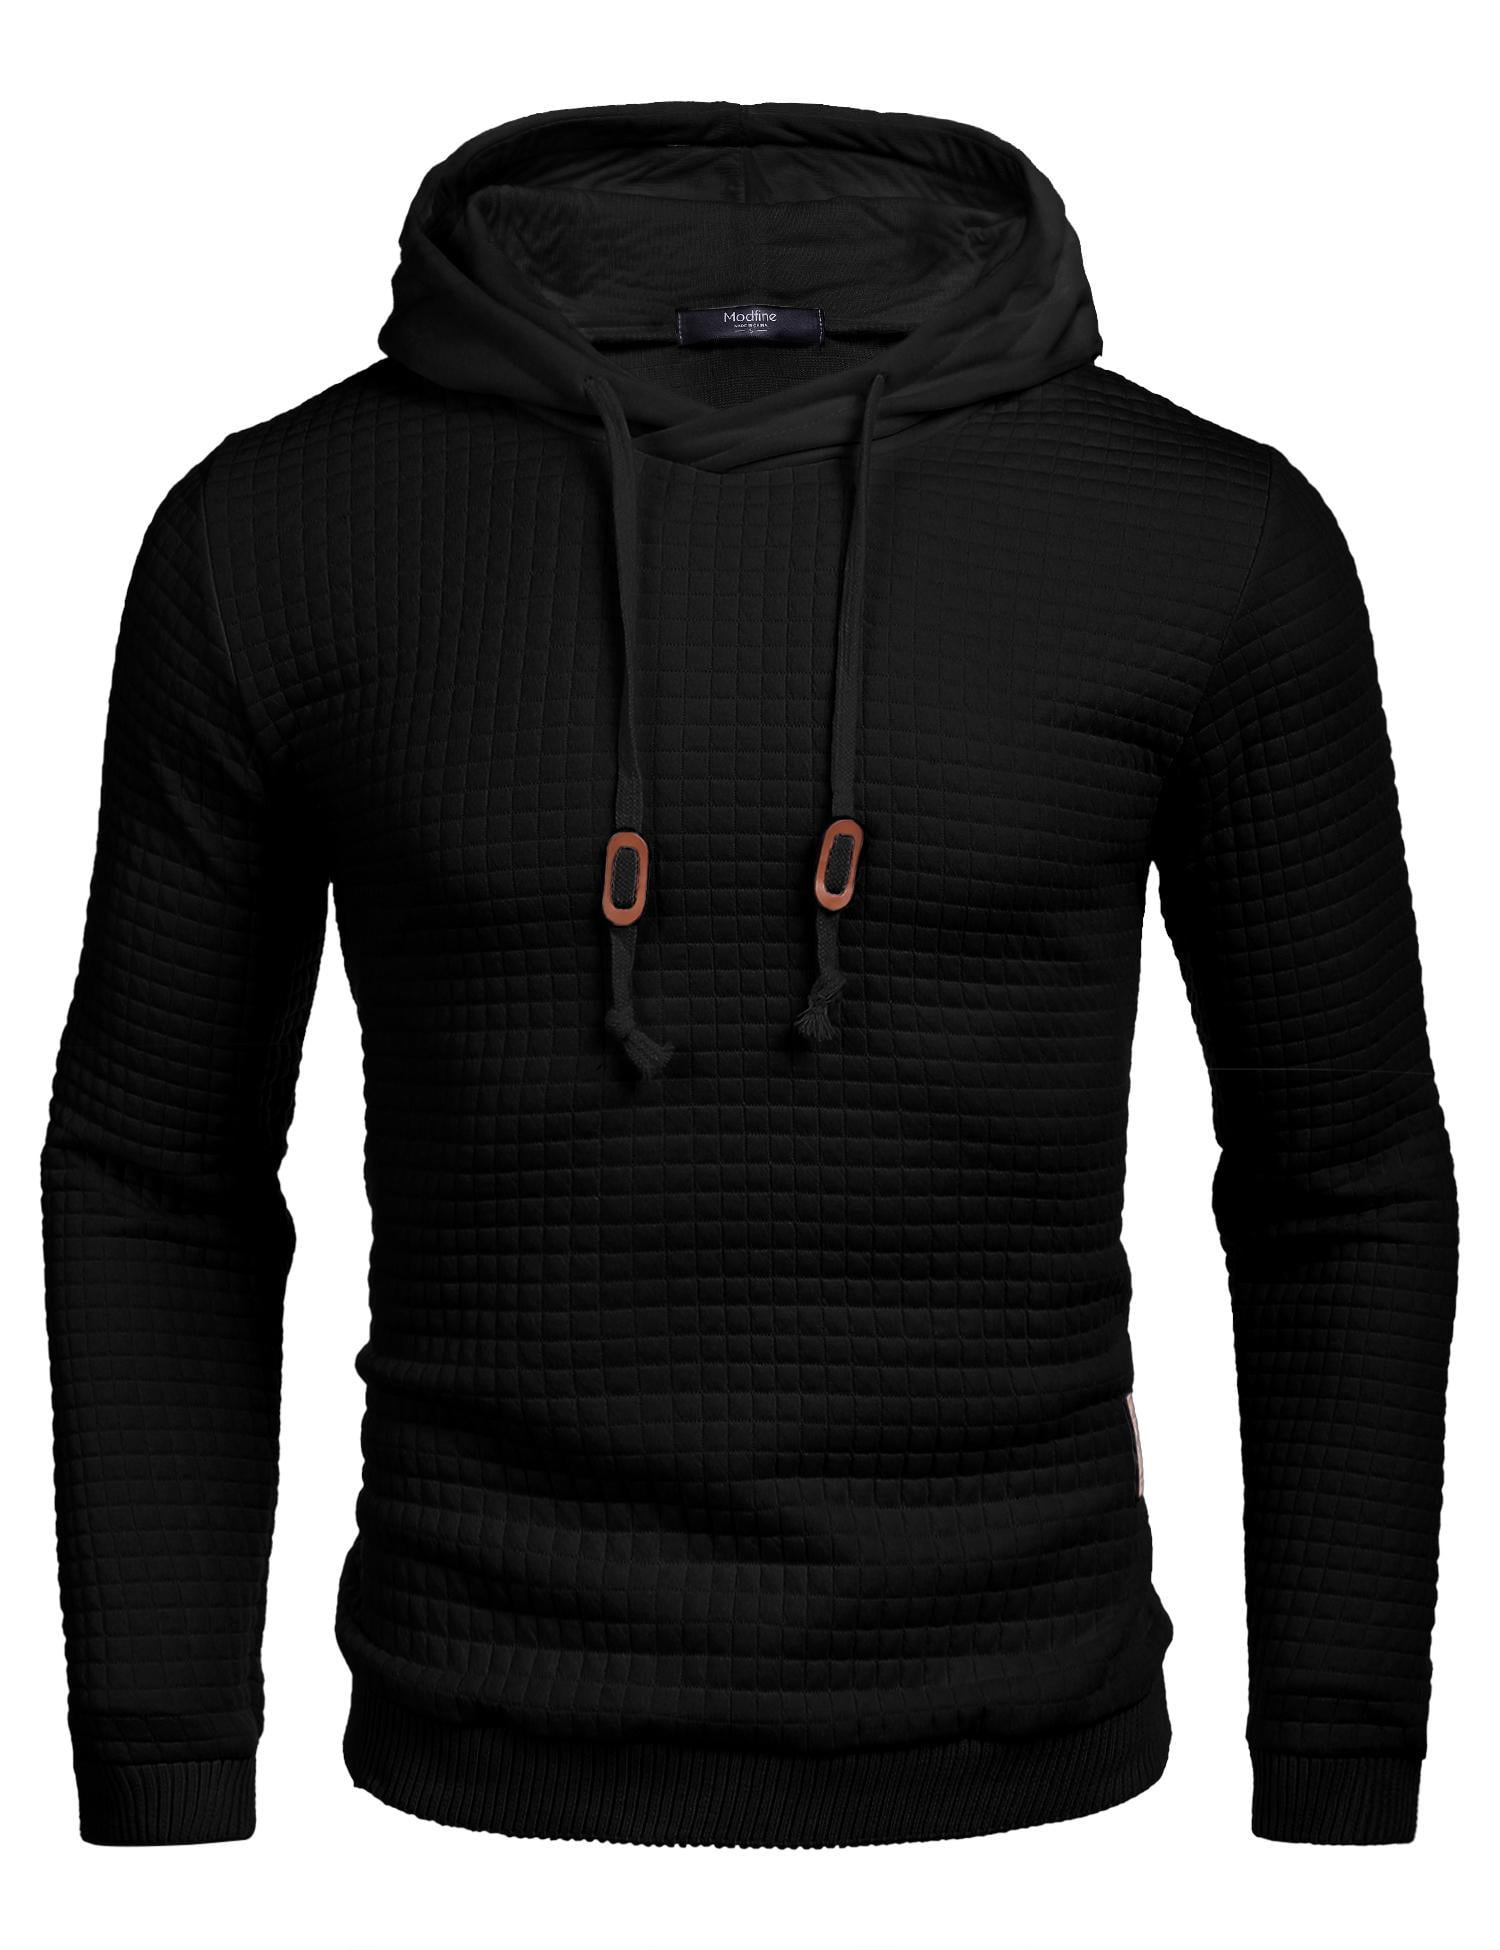 COOFANDY Mens Athletic Long Sleeve Sweatshirt with Zipped Pocket